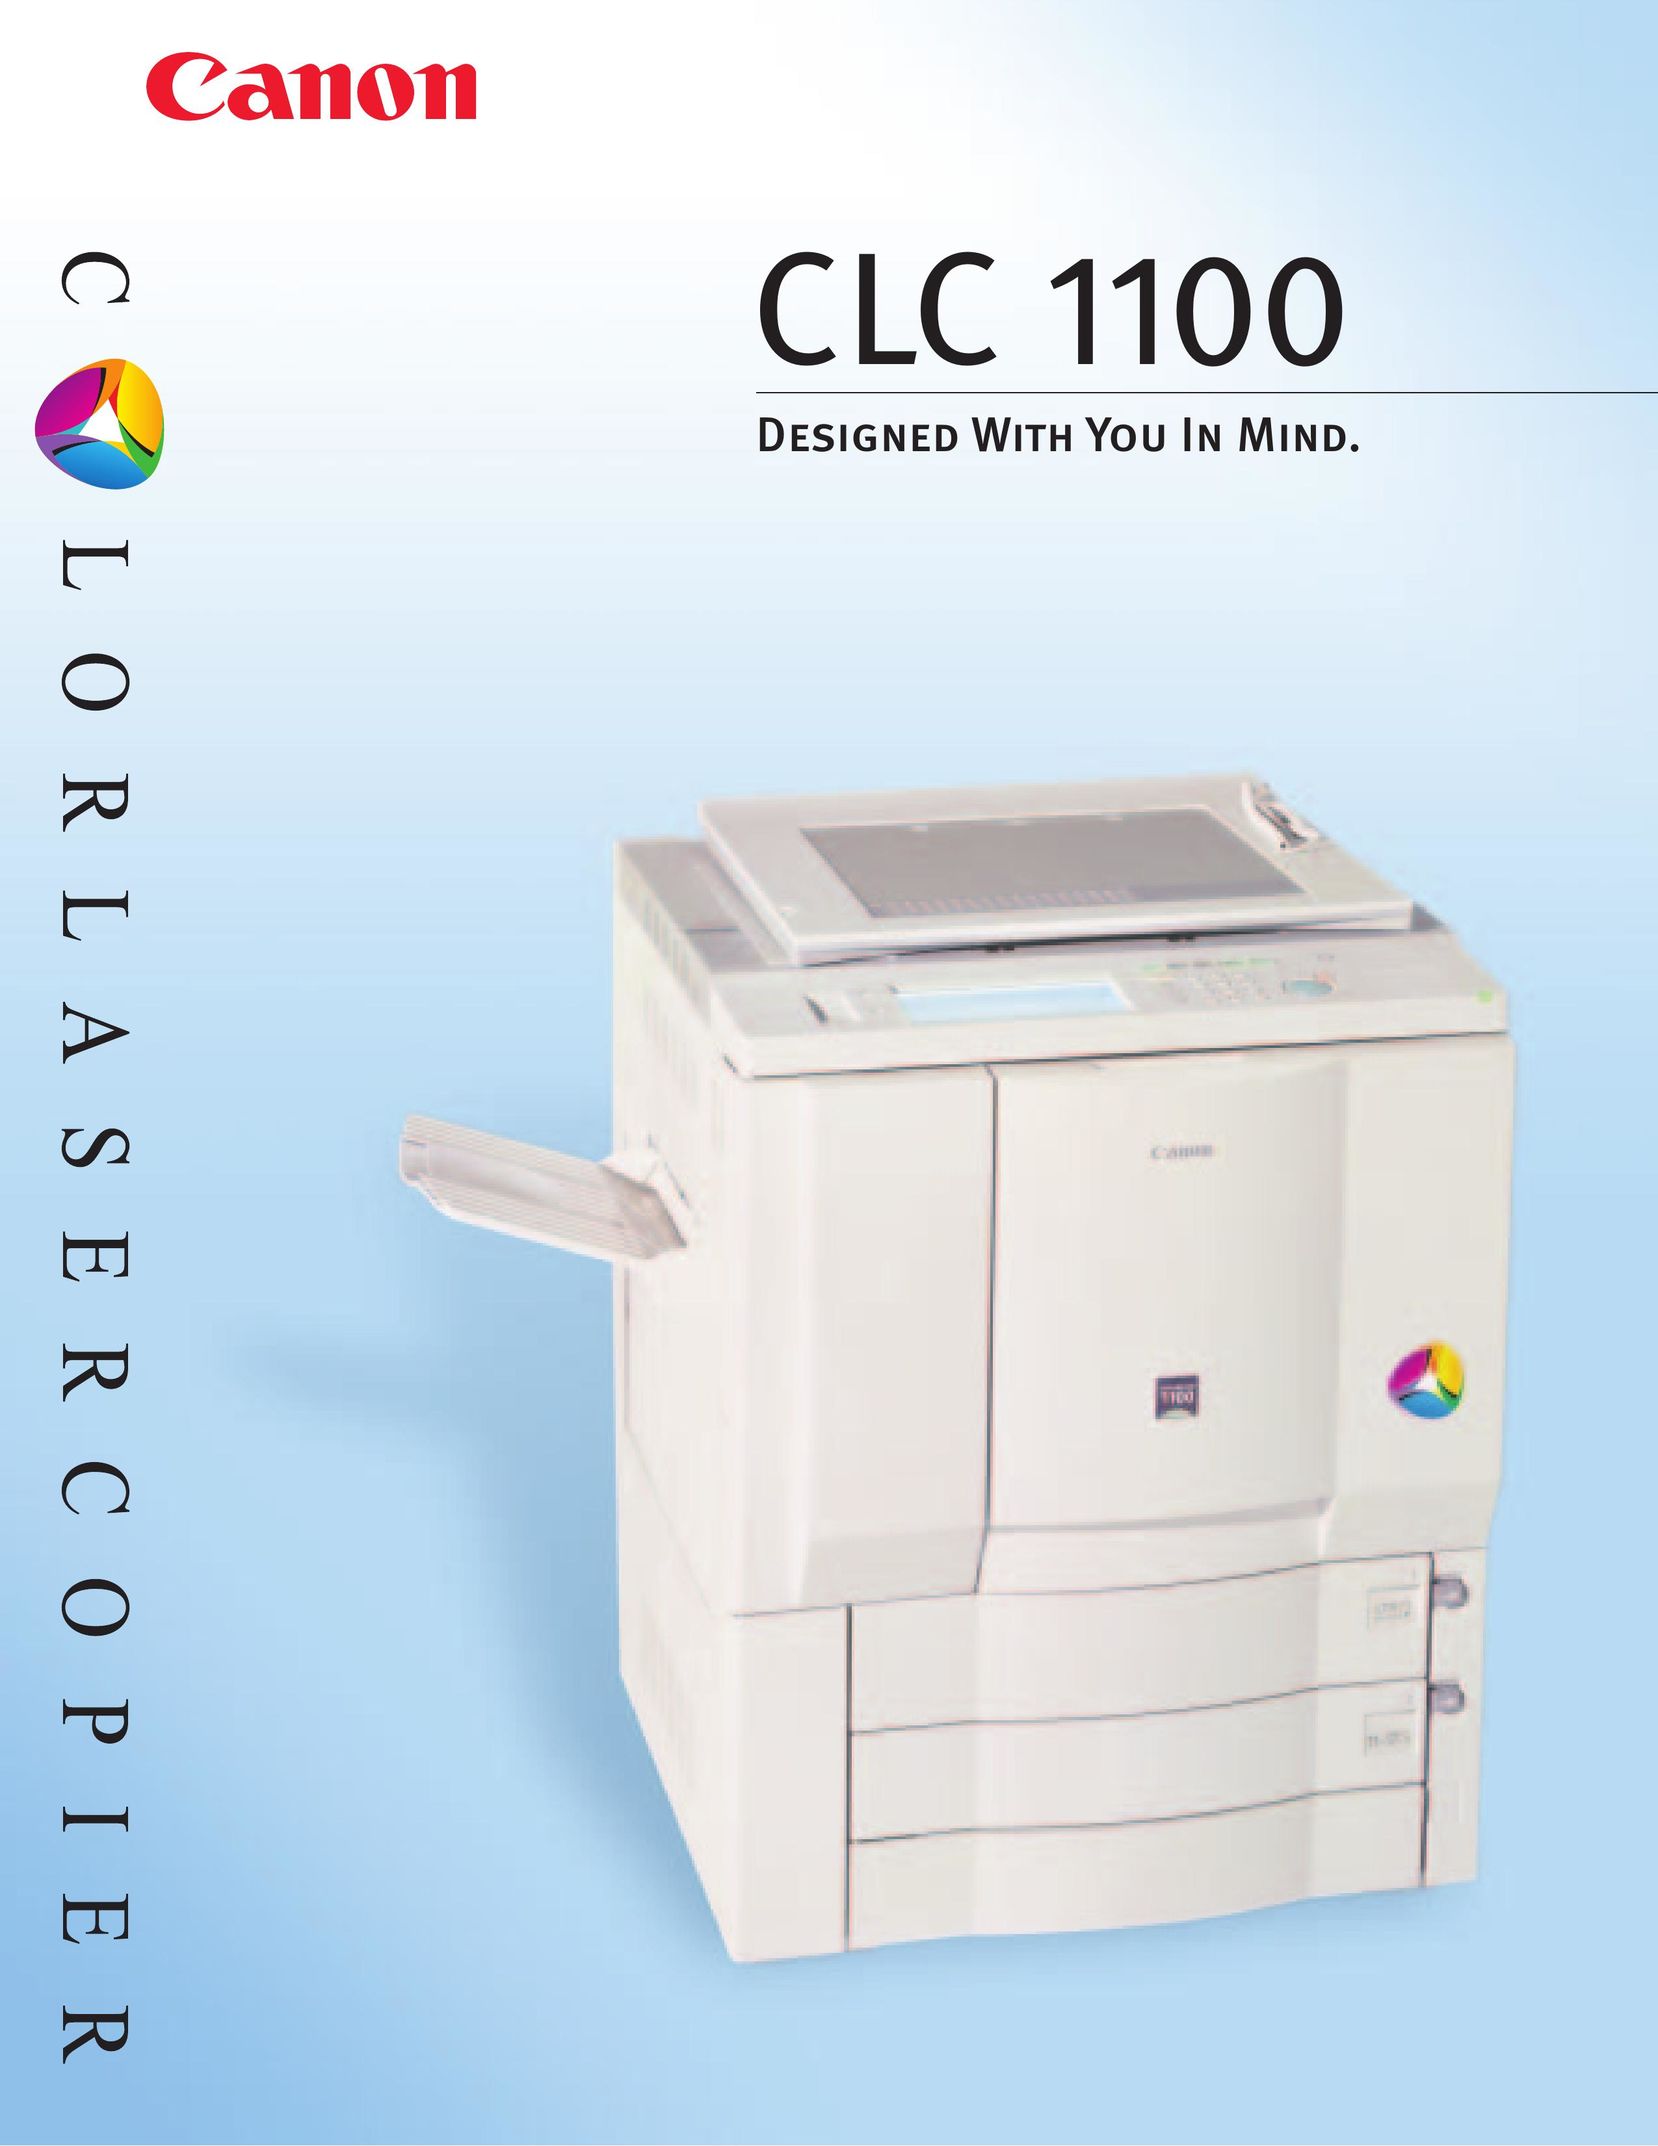 Canon CLC1100 Copier User Manual